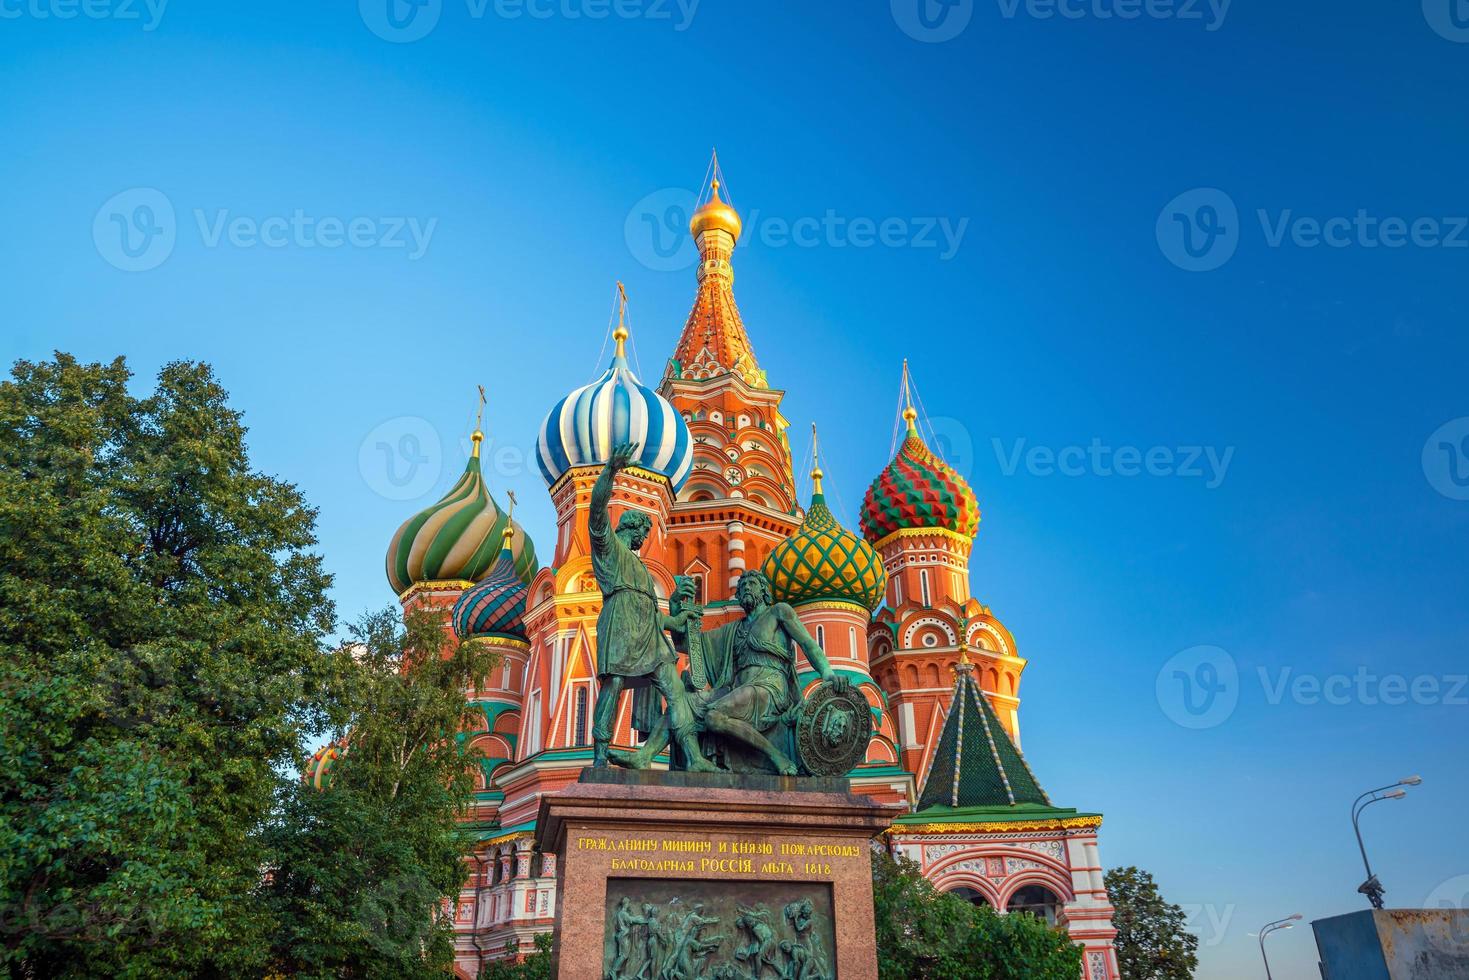 basilikas domkyrka vid Röda torget i Moskva foto